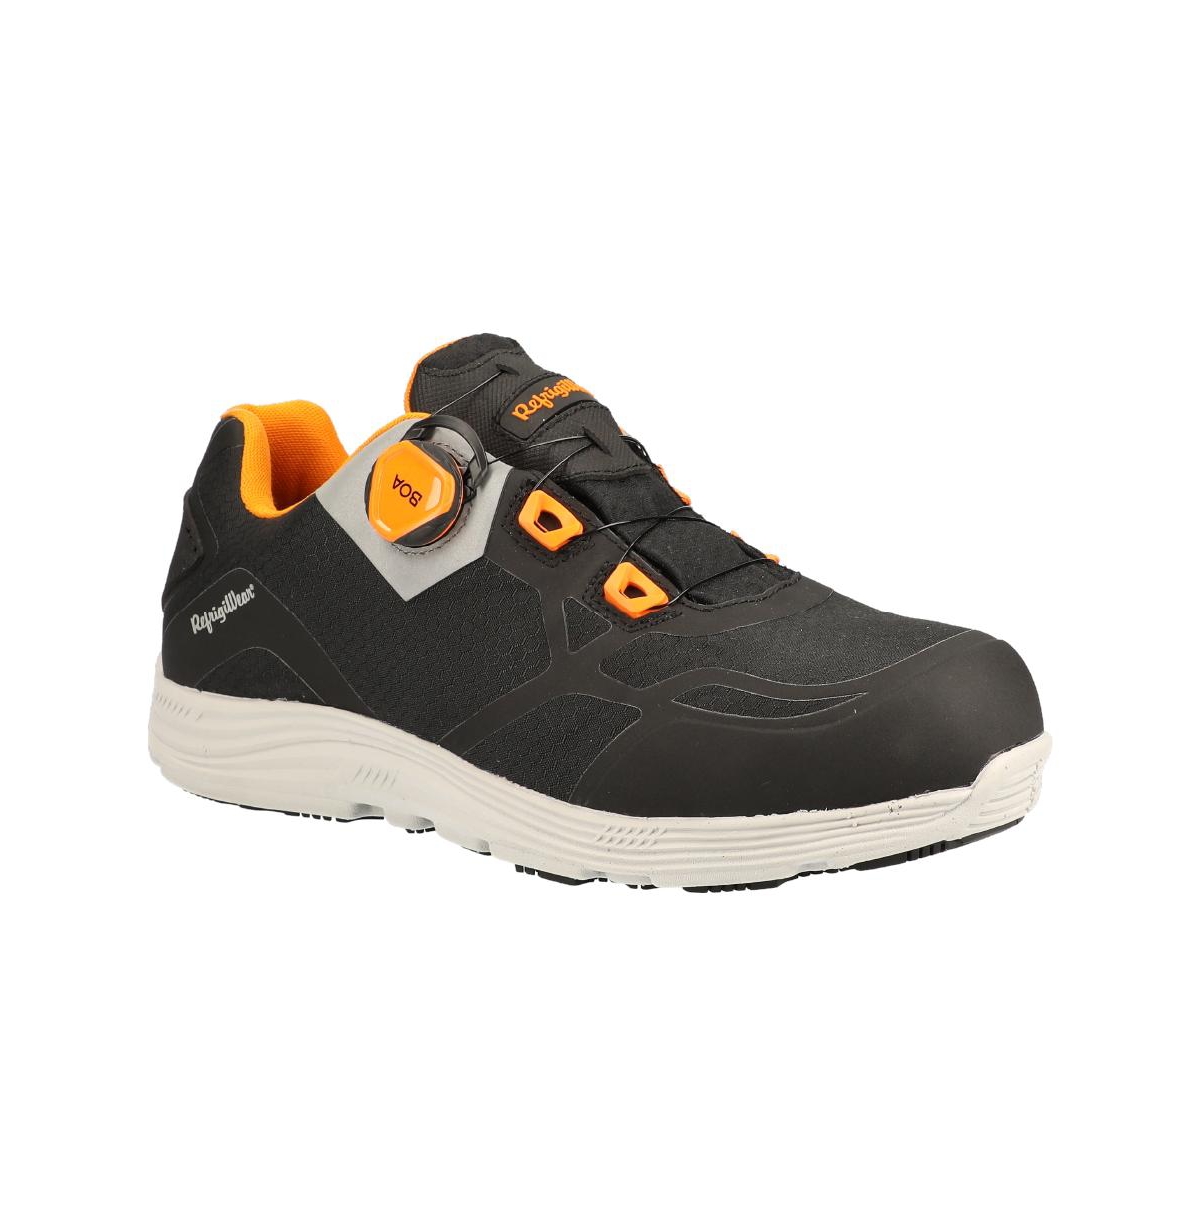 Men's FleetStride Plus Waterproof Safety Sneaker - Black